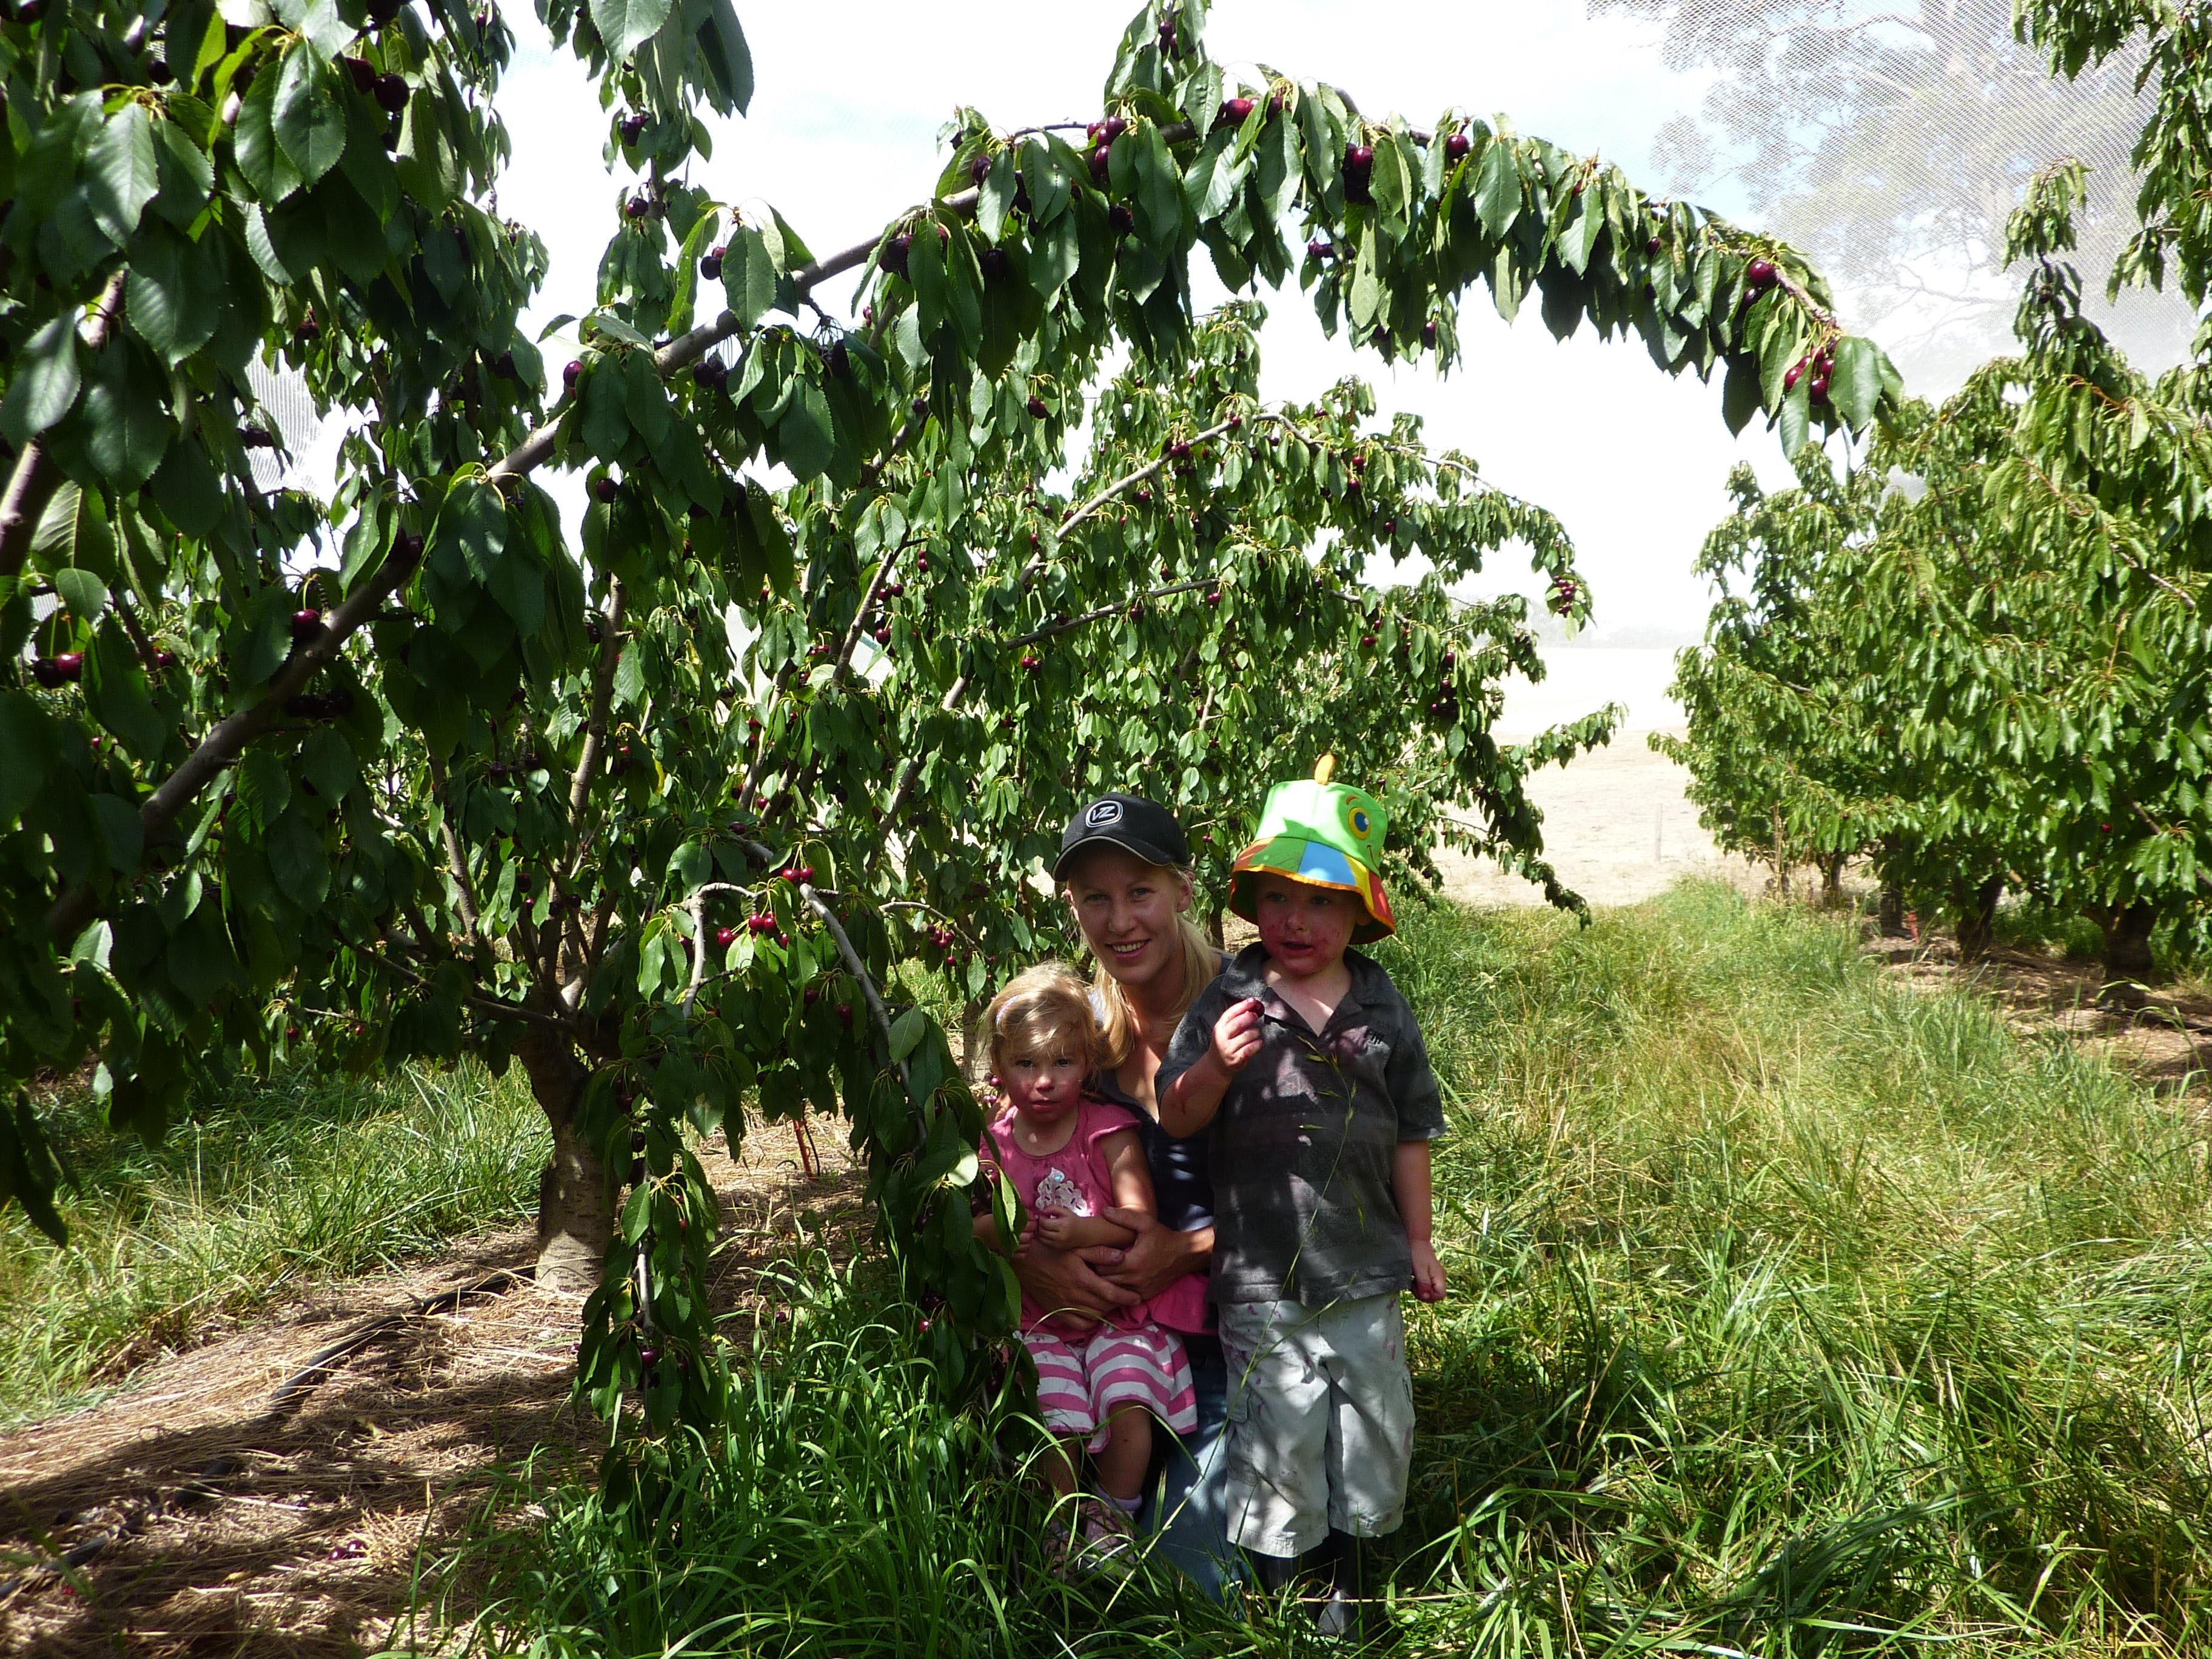 Harben Vale Pick Your Own Cherries - South Australia Travel